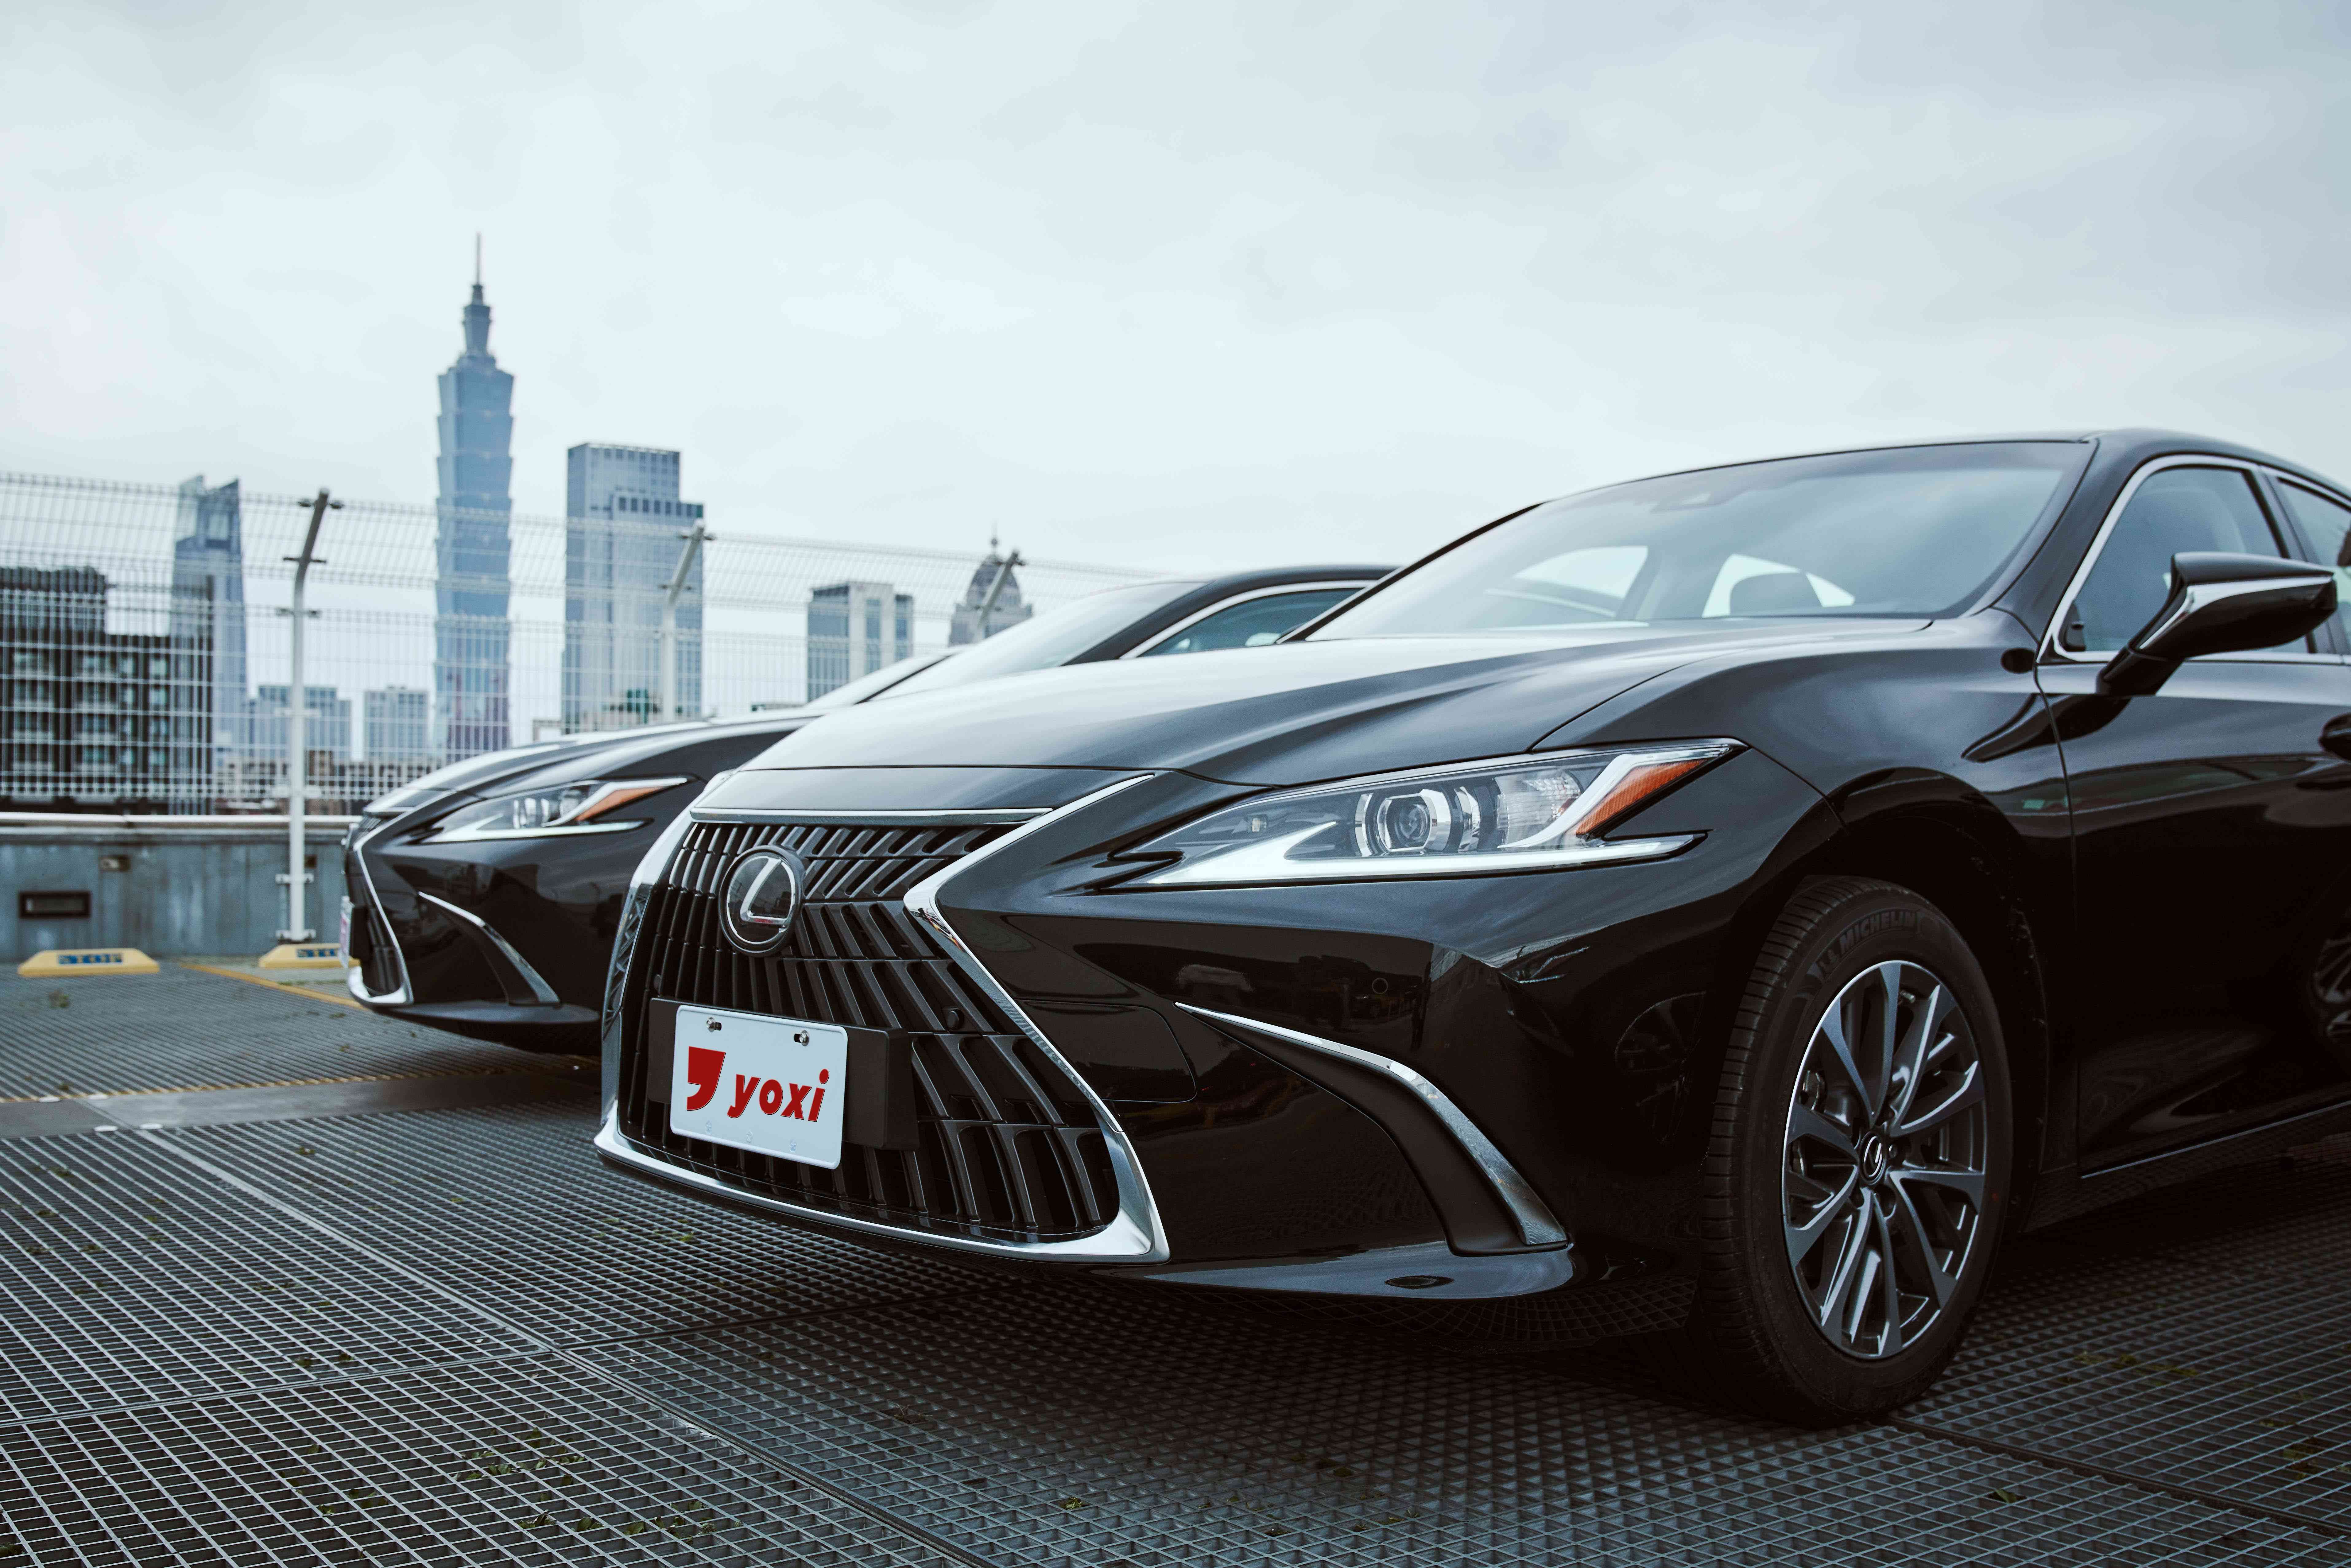 yoxi尊榮多元全新登場Lexus專屬香氛隨行 乘車質感再升級